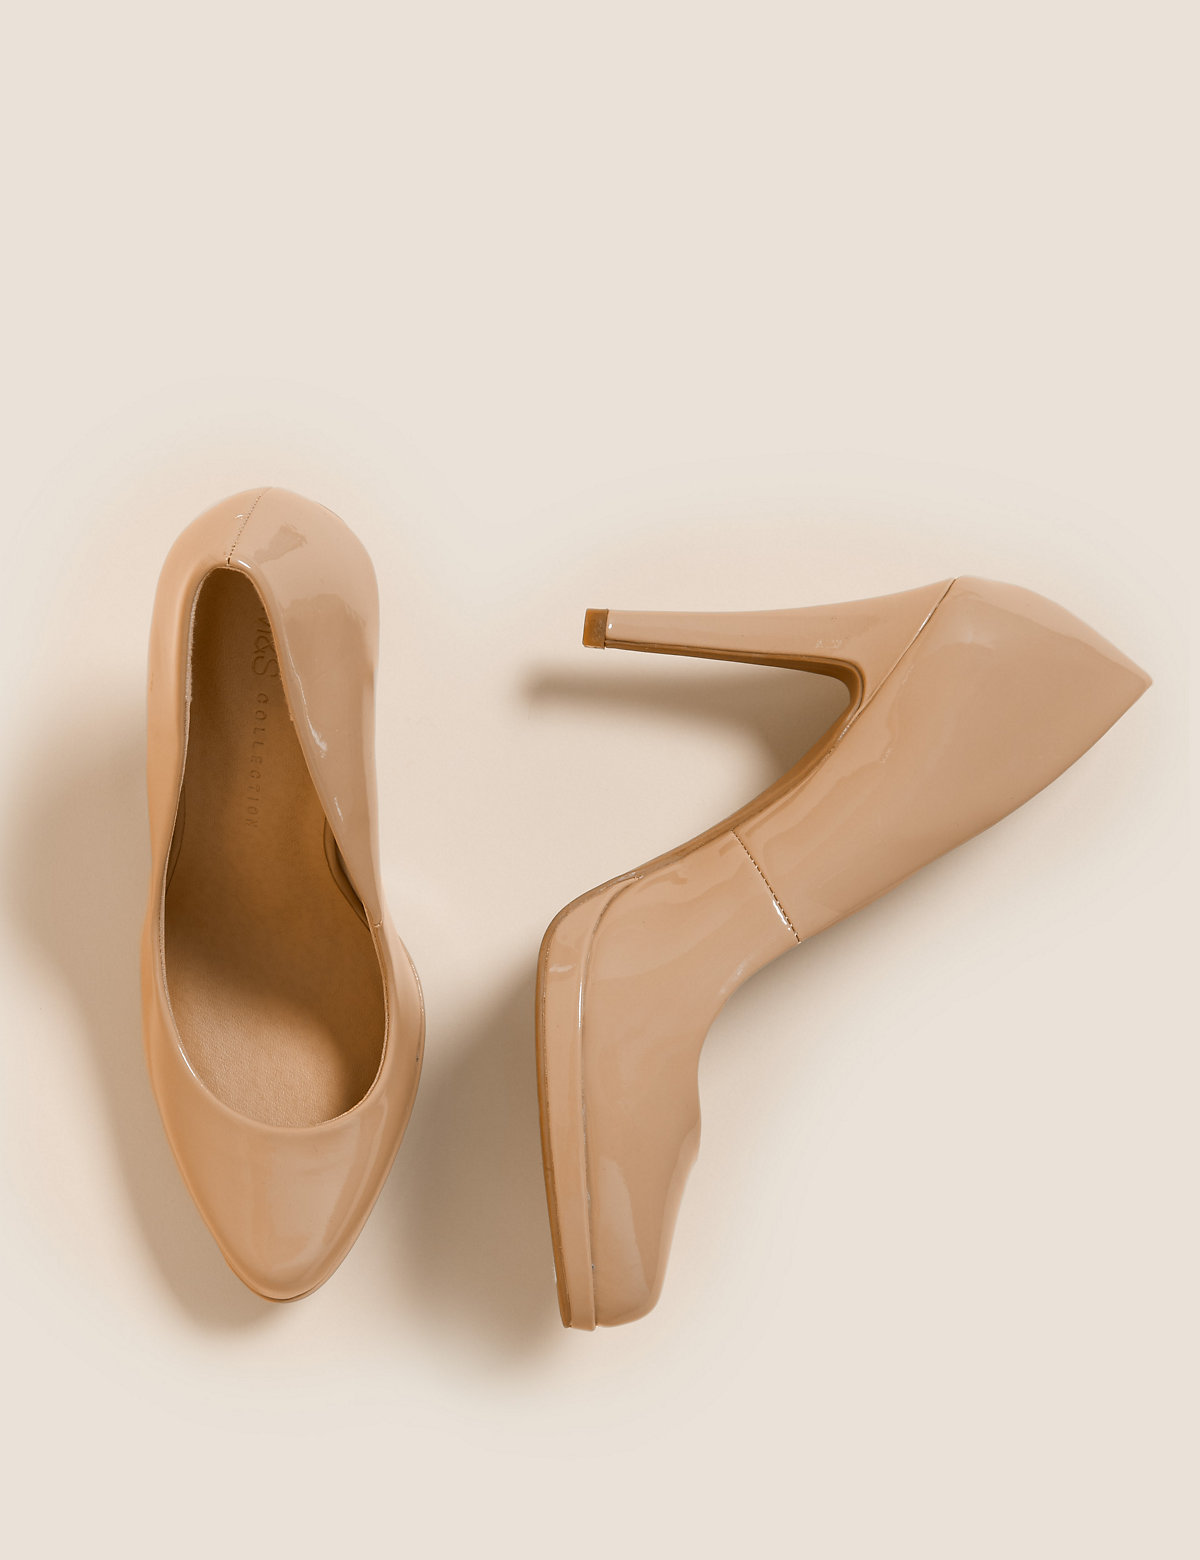 Patent Stiletto Heel Court Shoes